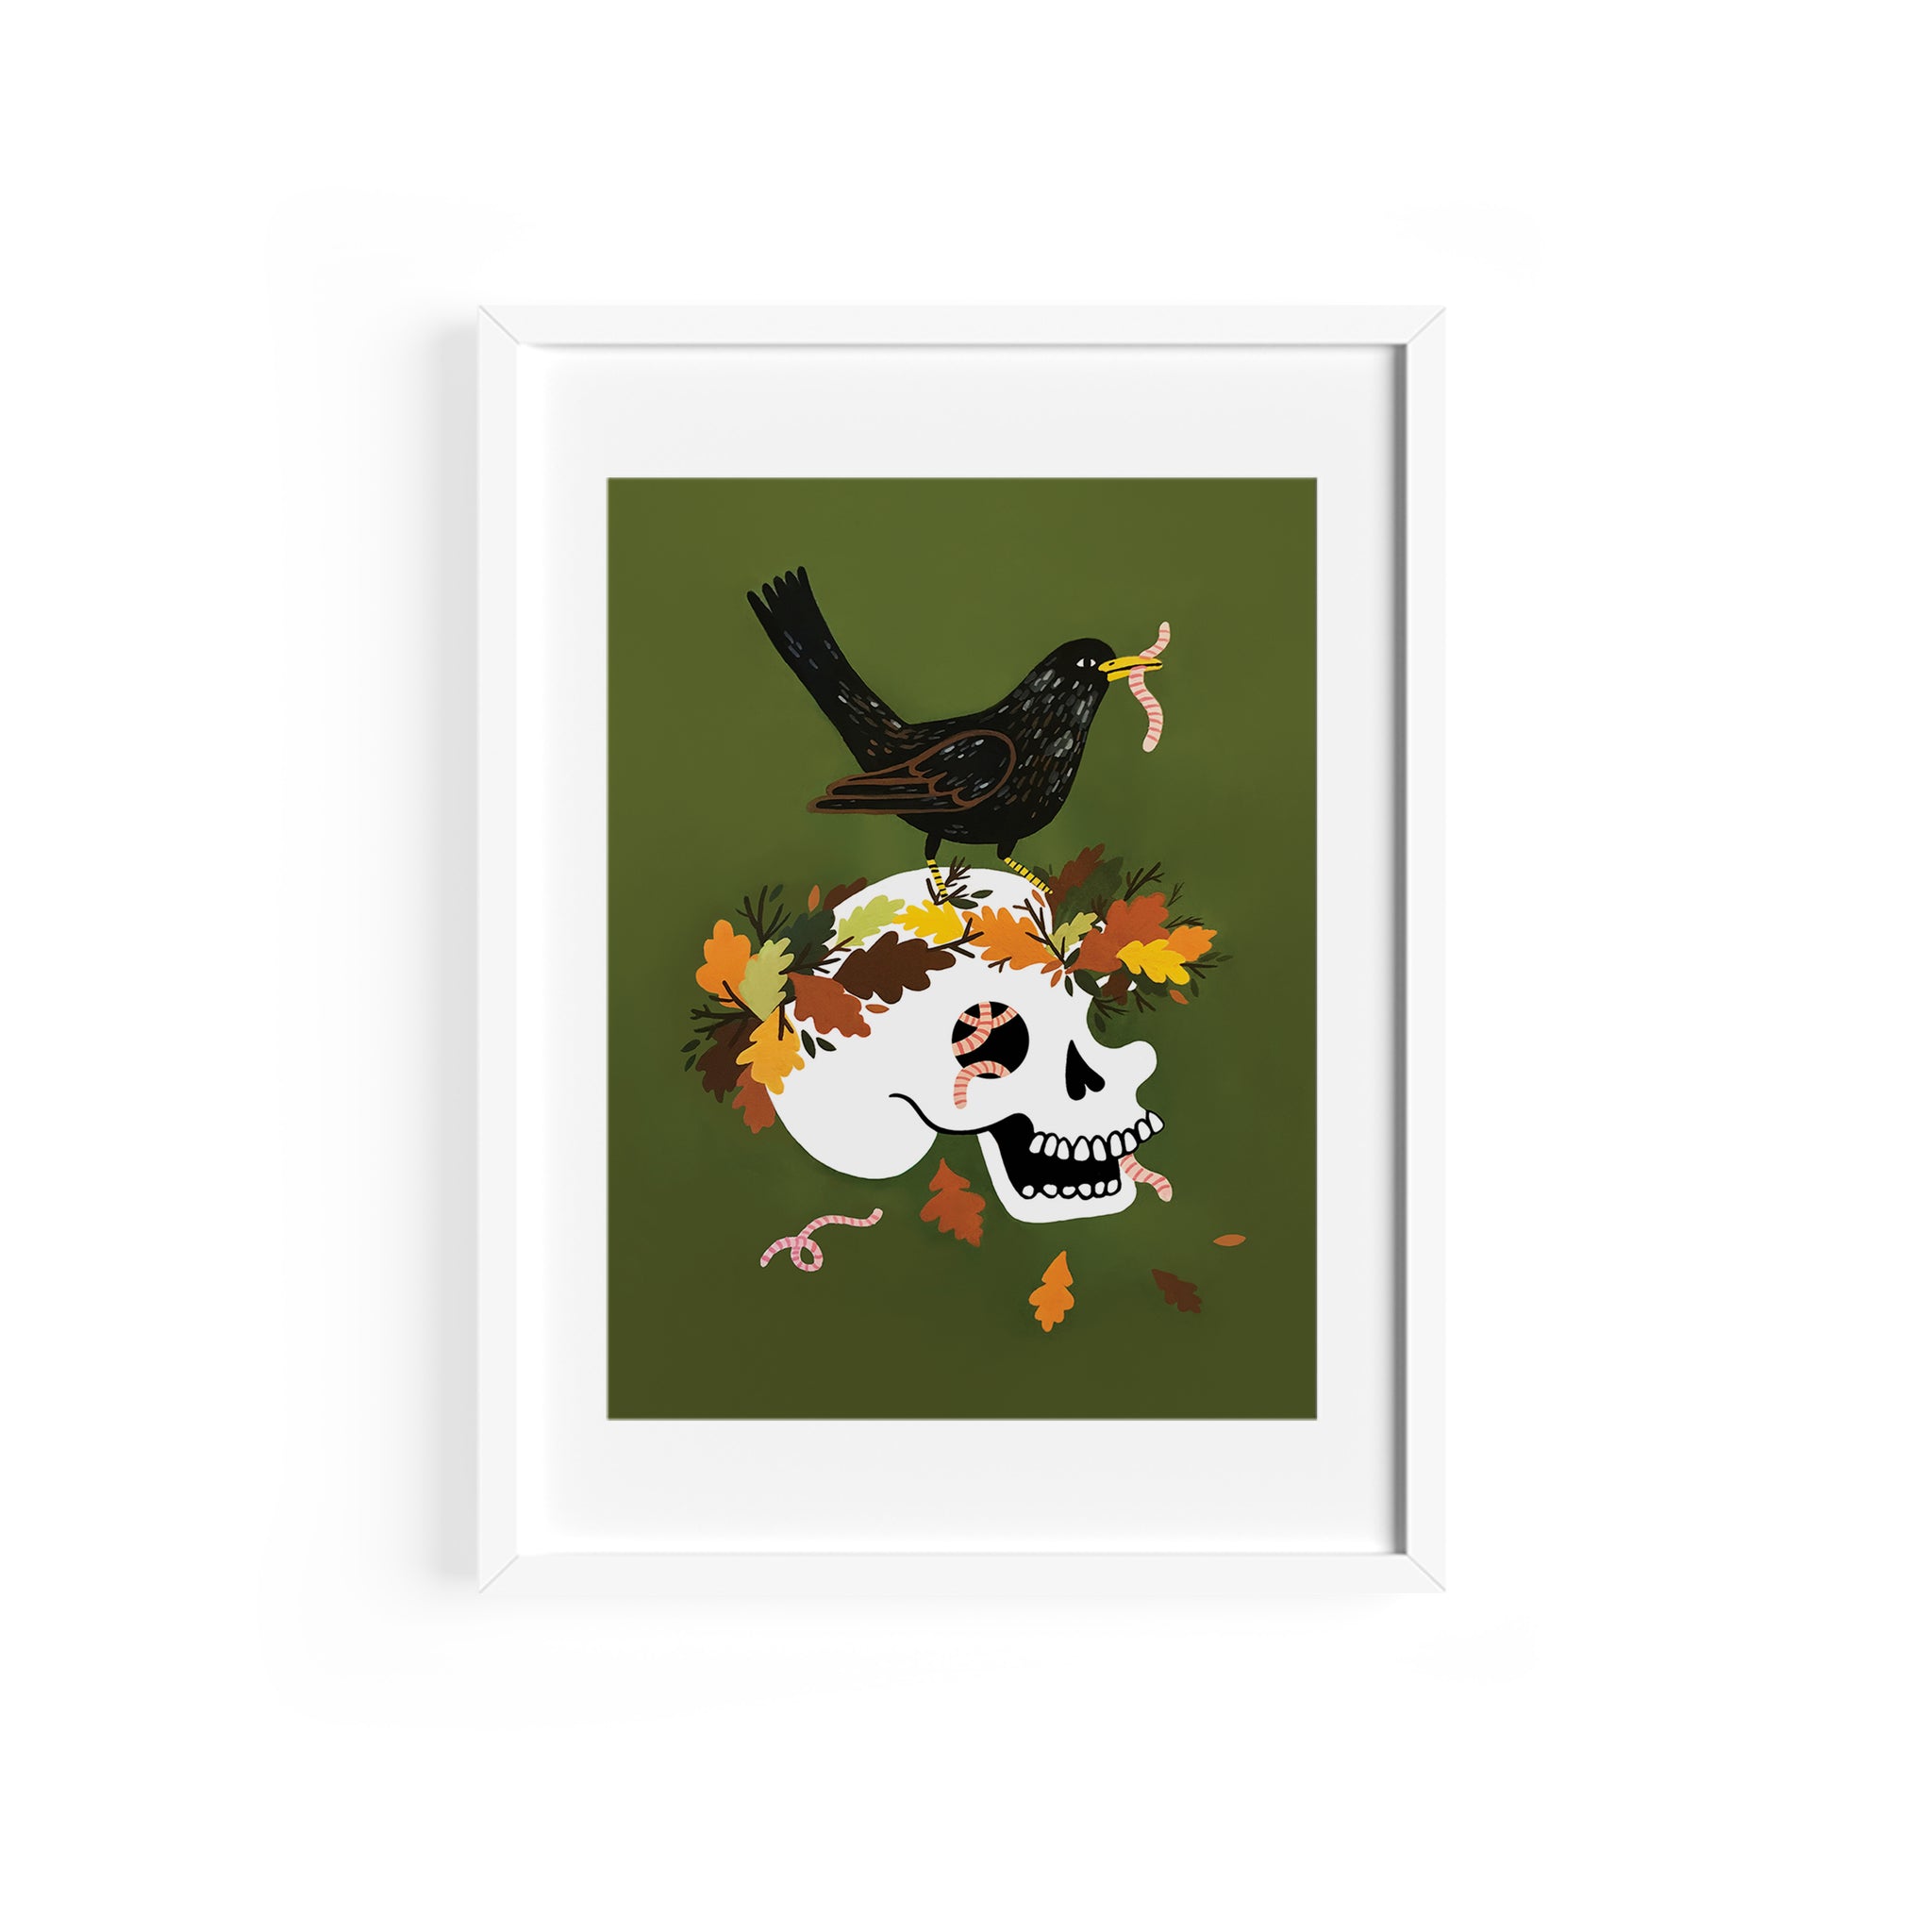 Blackbird and Skull Print